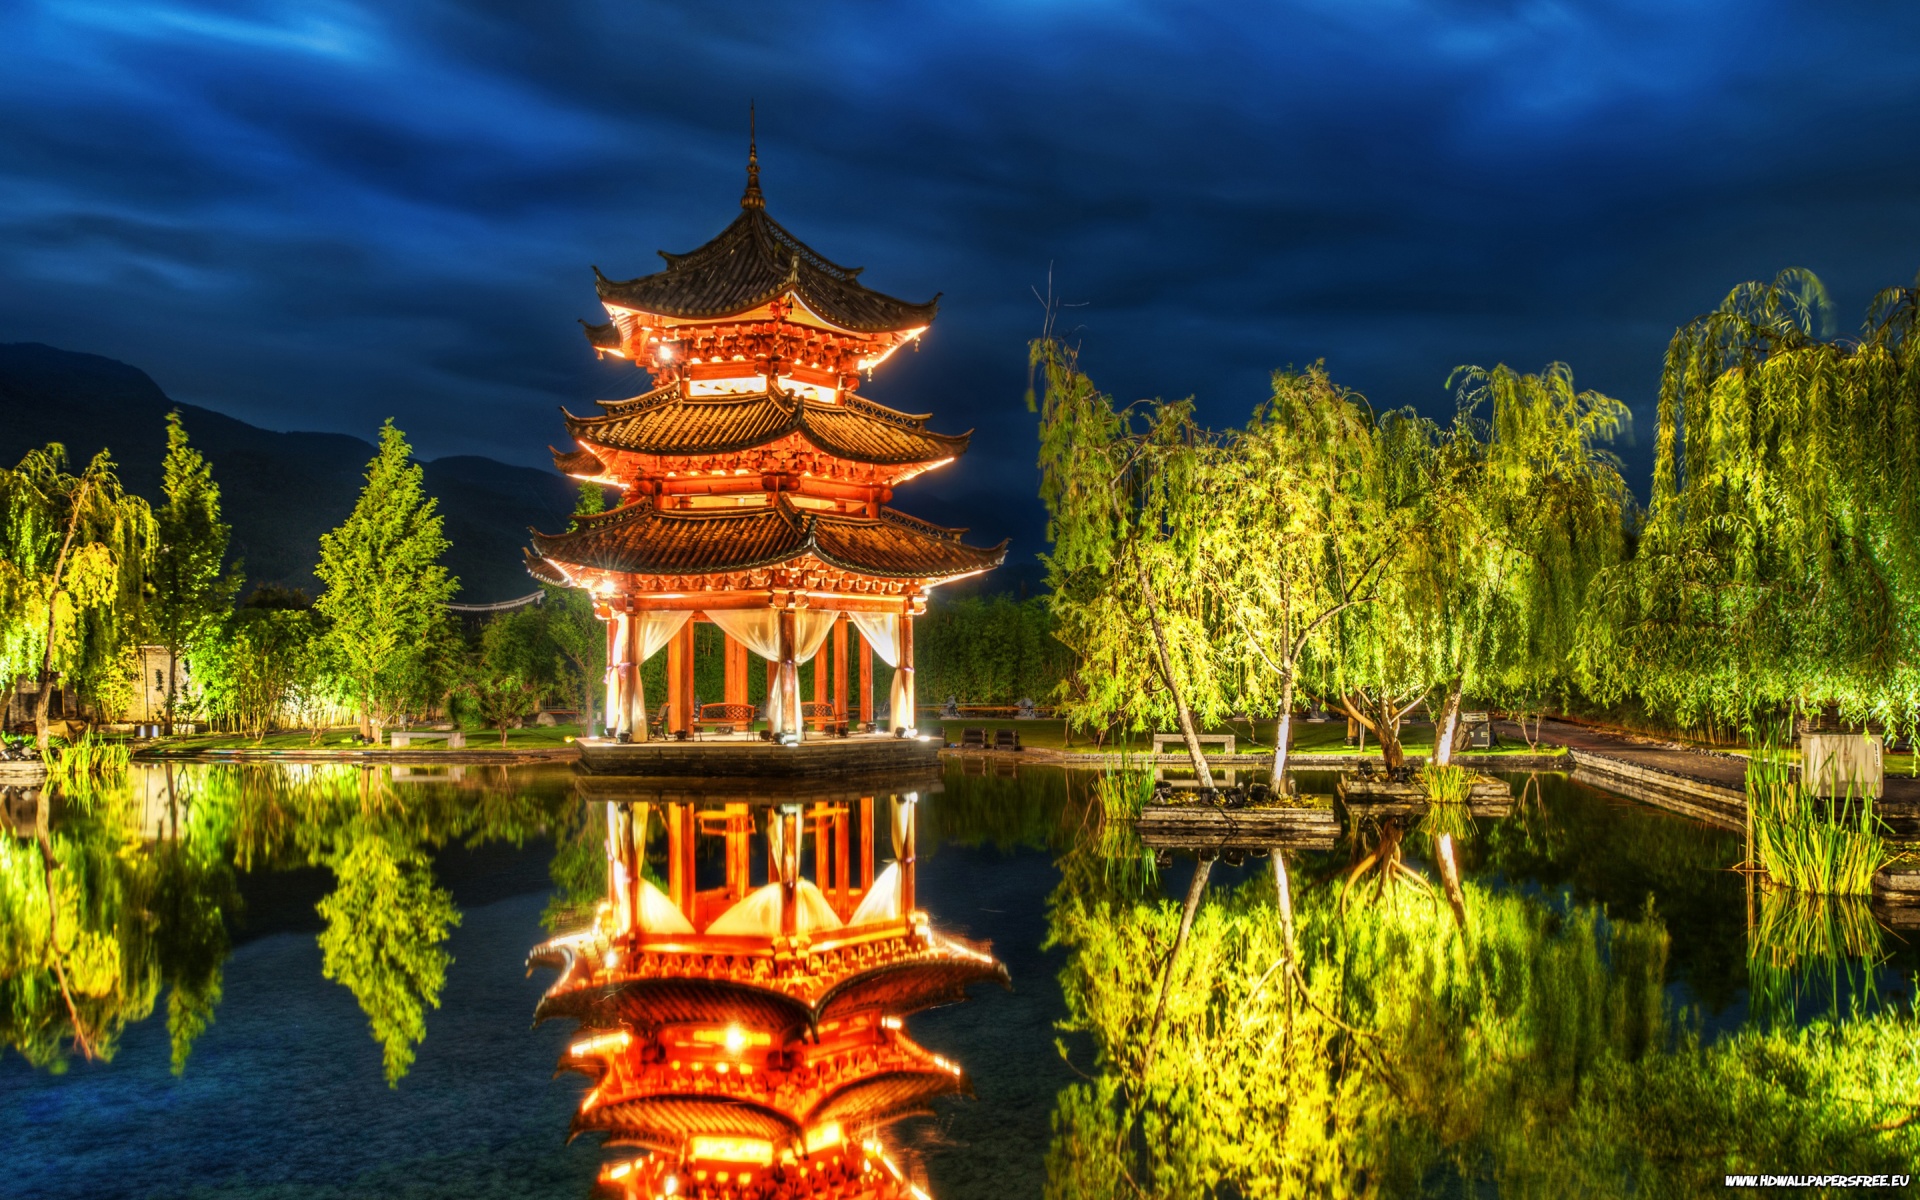 Download Free Chinese Pagoda wallpaperdesktopiPad background in Free